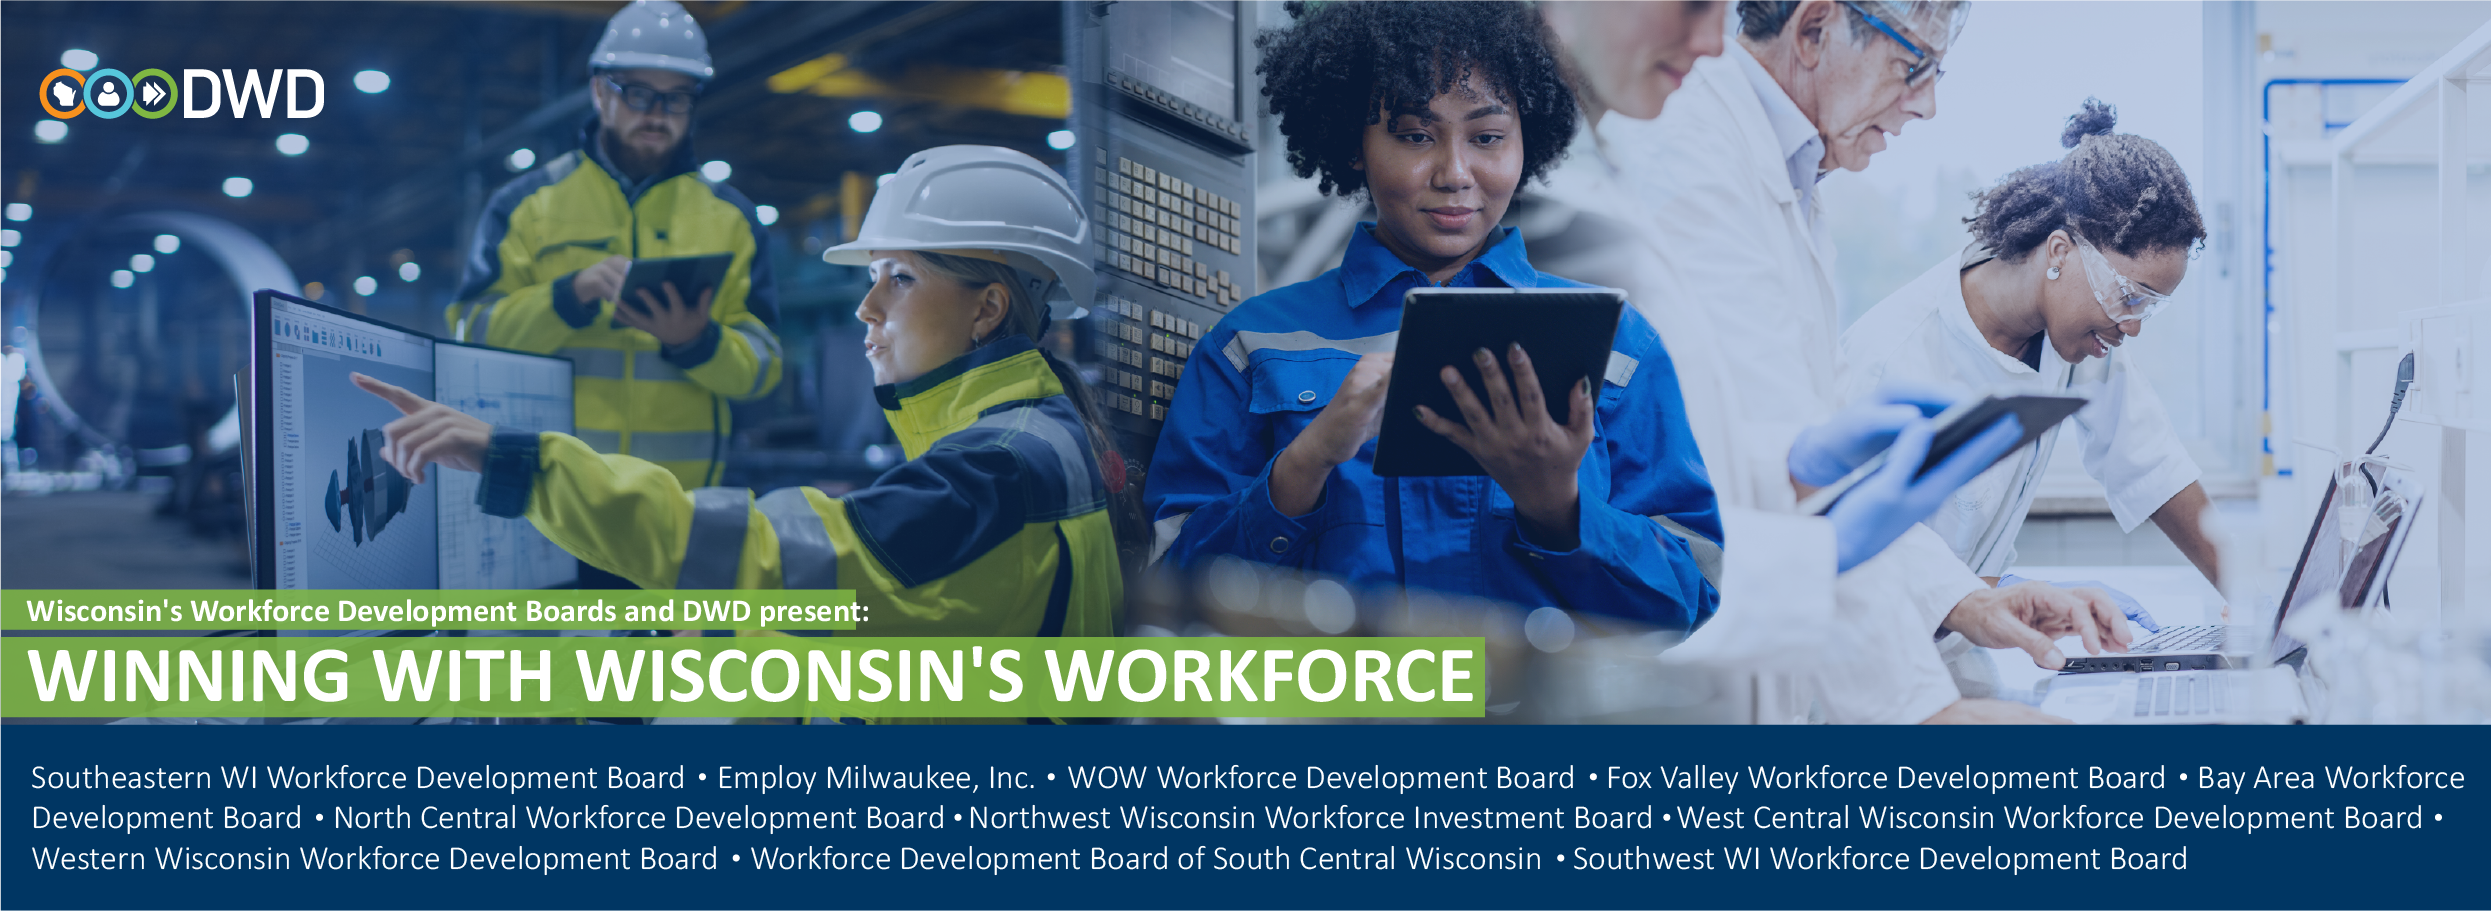 Winning with Wisconsin's Workforce